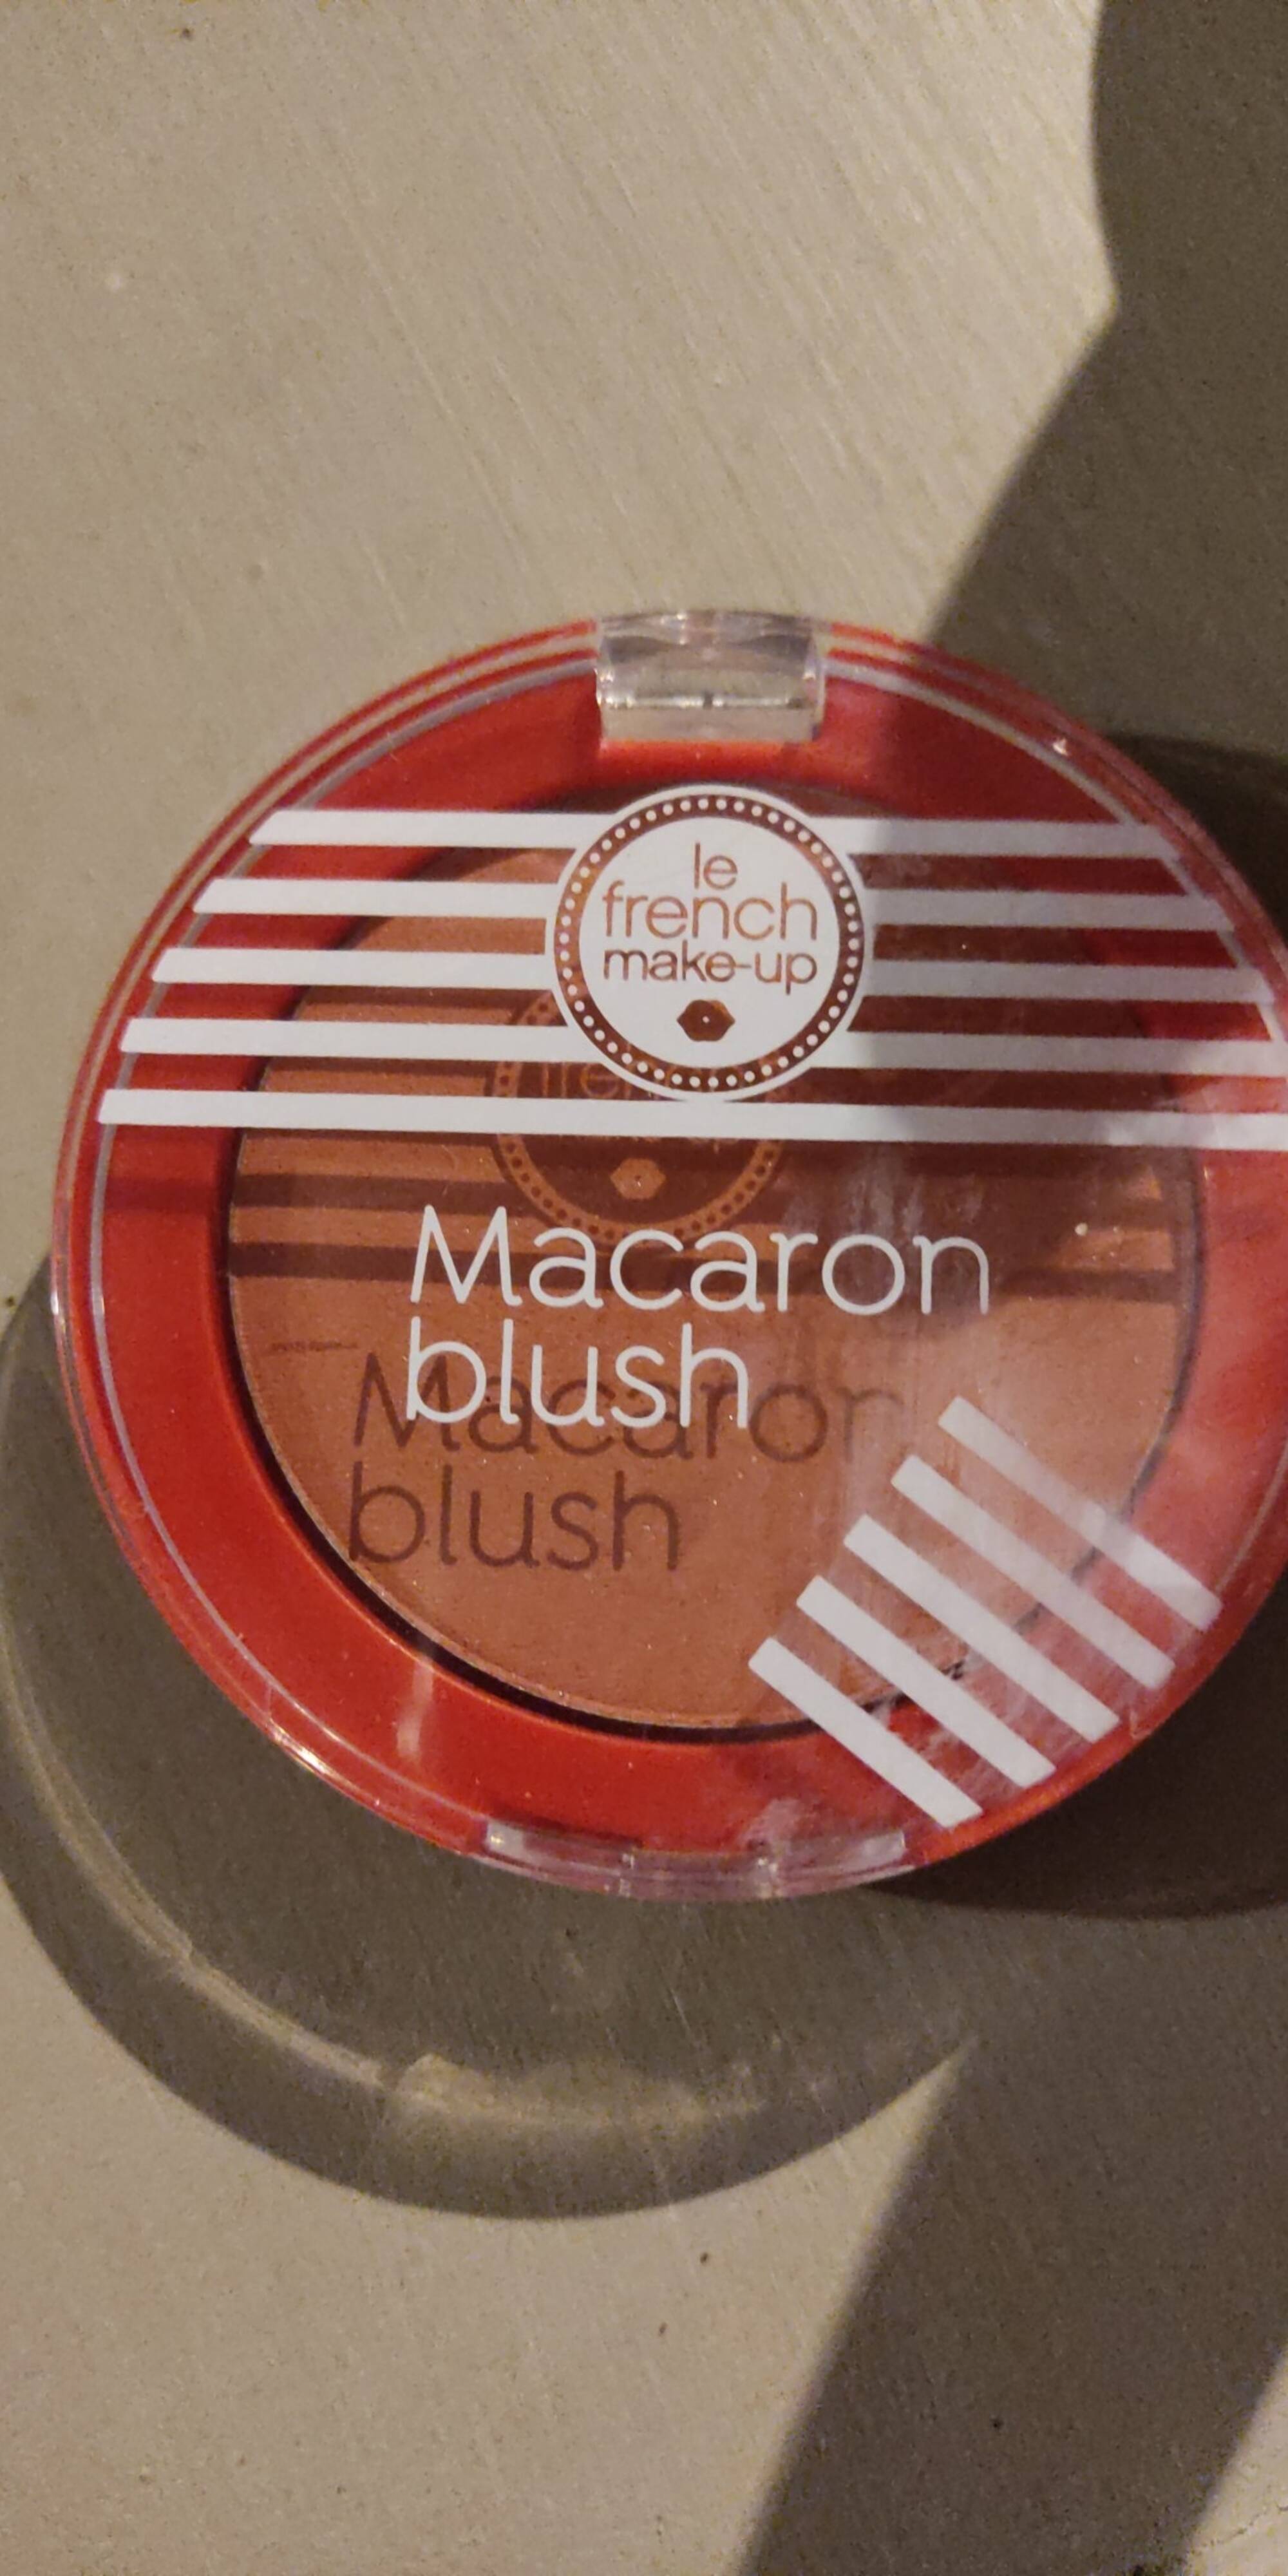 LE FRENCH MAKE-UP - Macaron blush 05 rose ambre